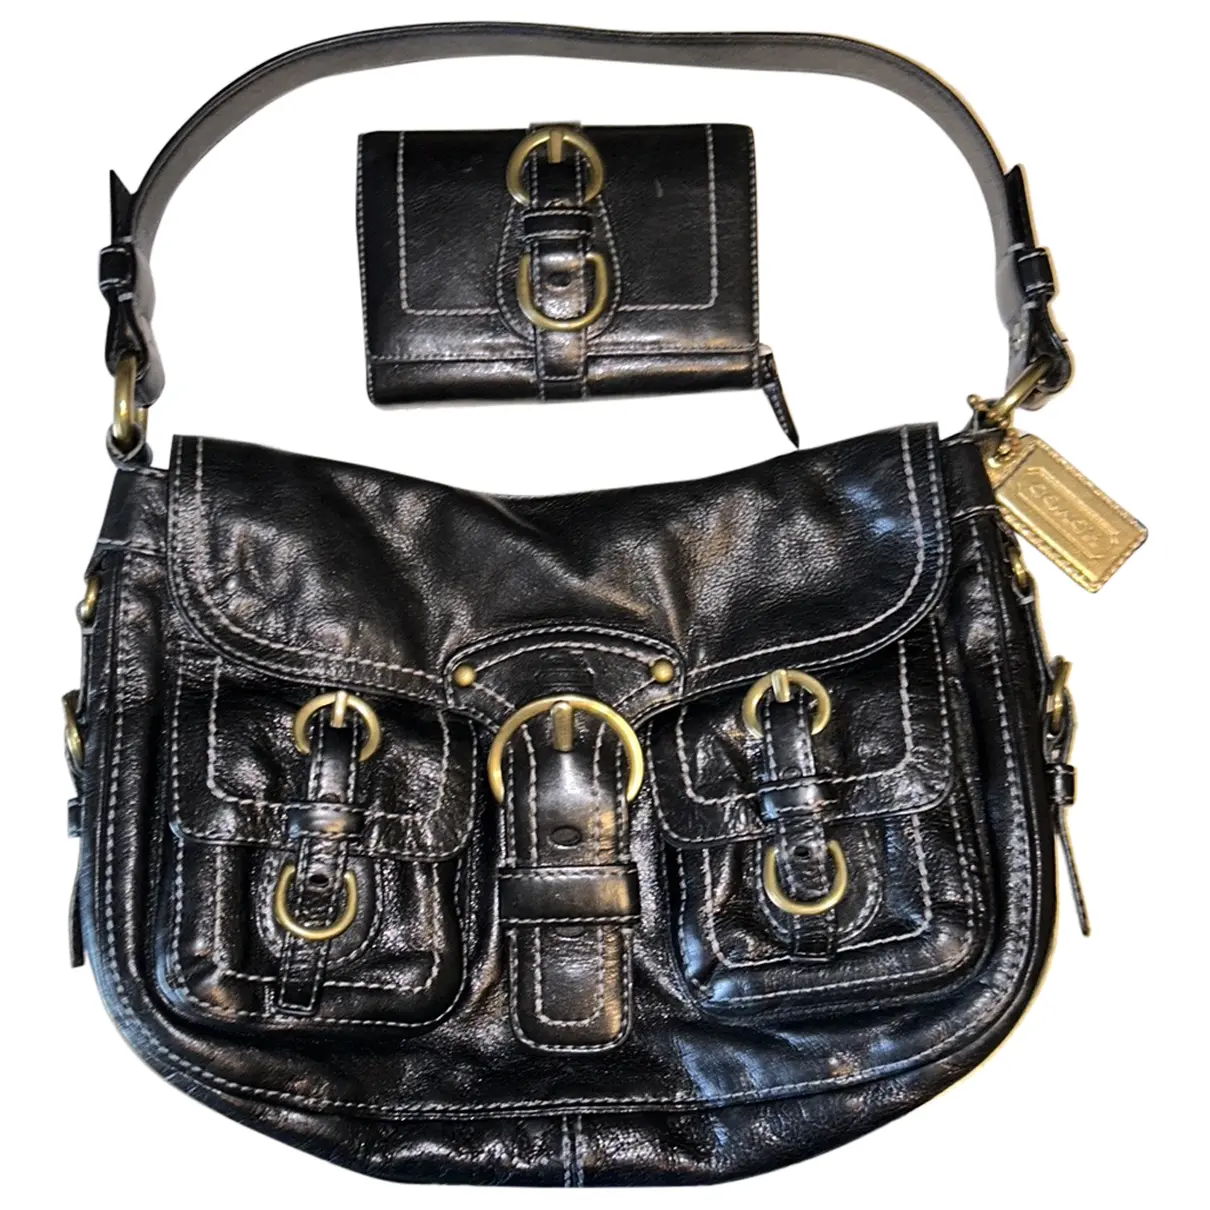 Madison leather handbag